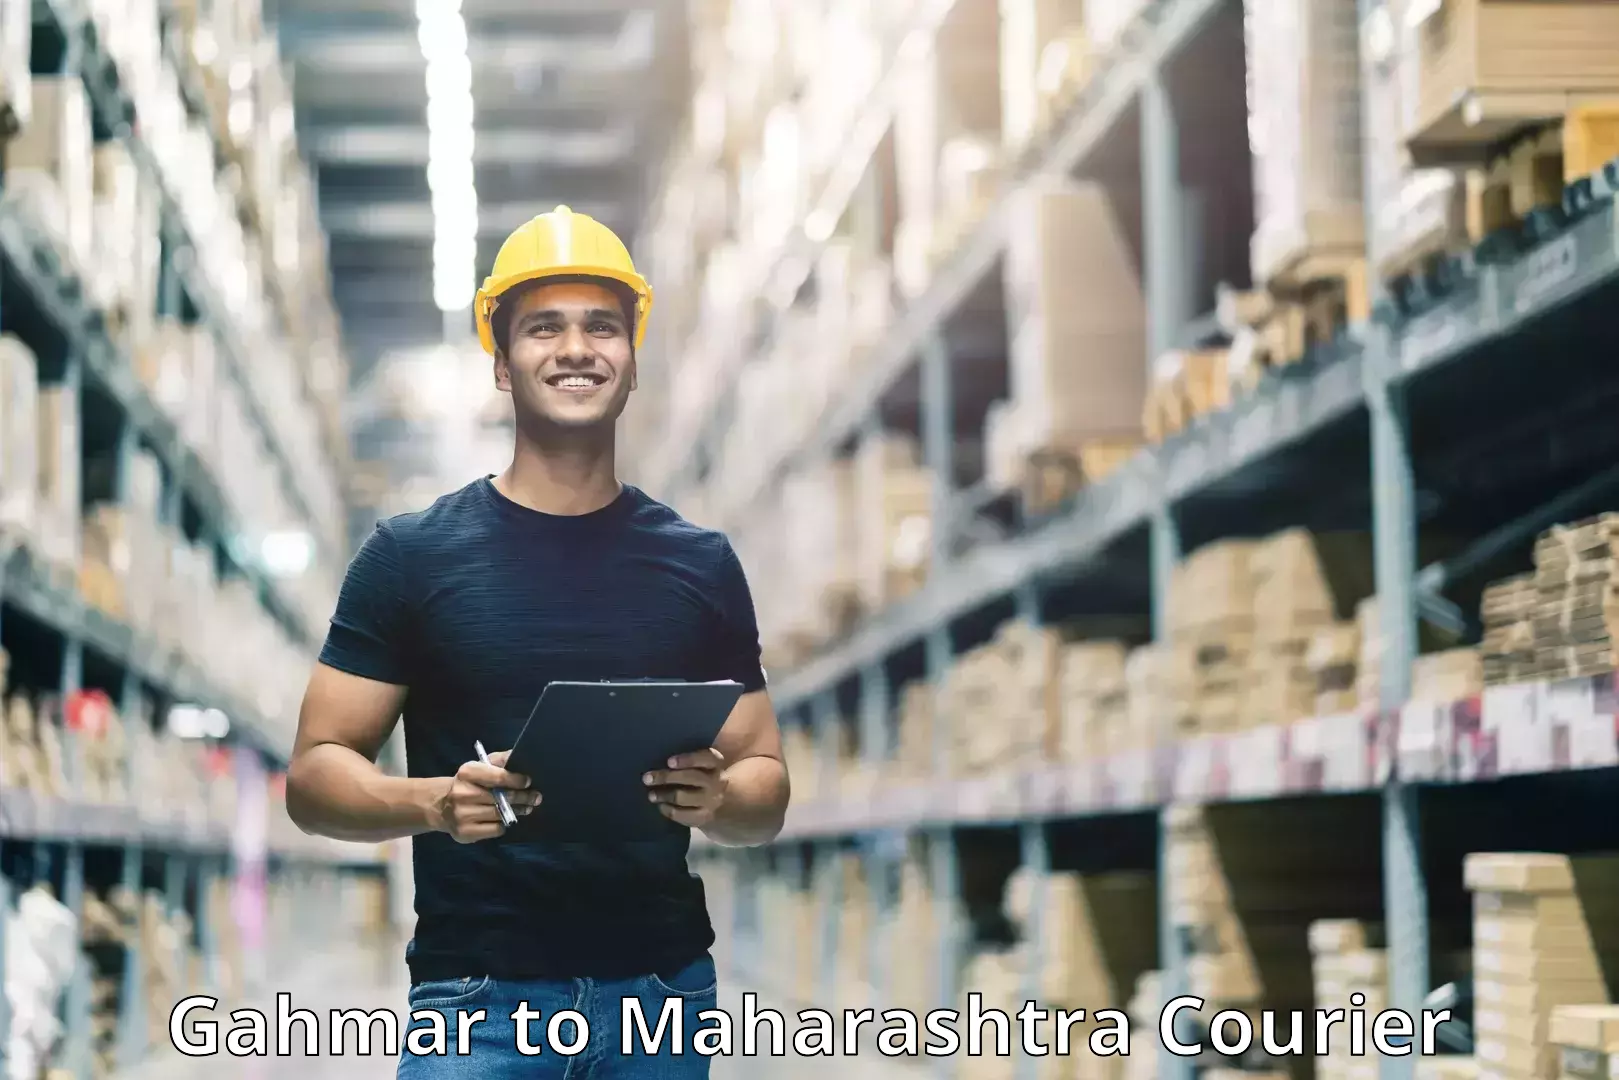 Customer-focused courier in Gahmar to Mumbai Port